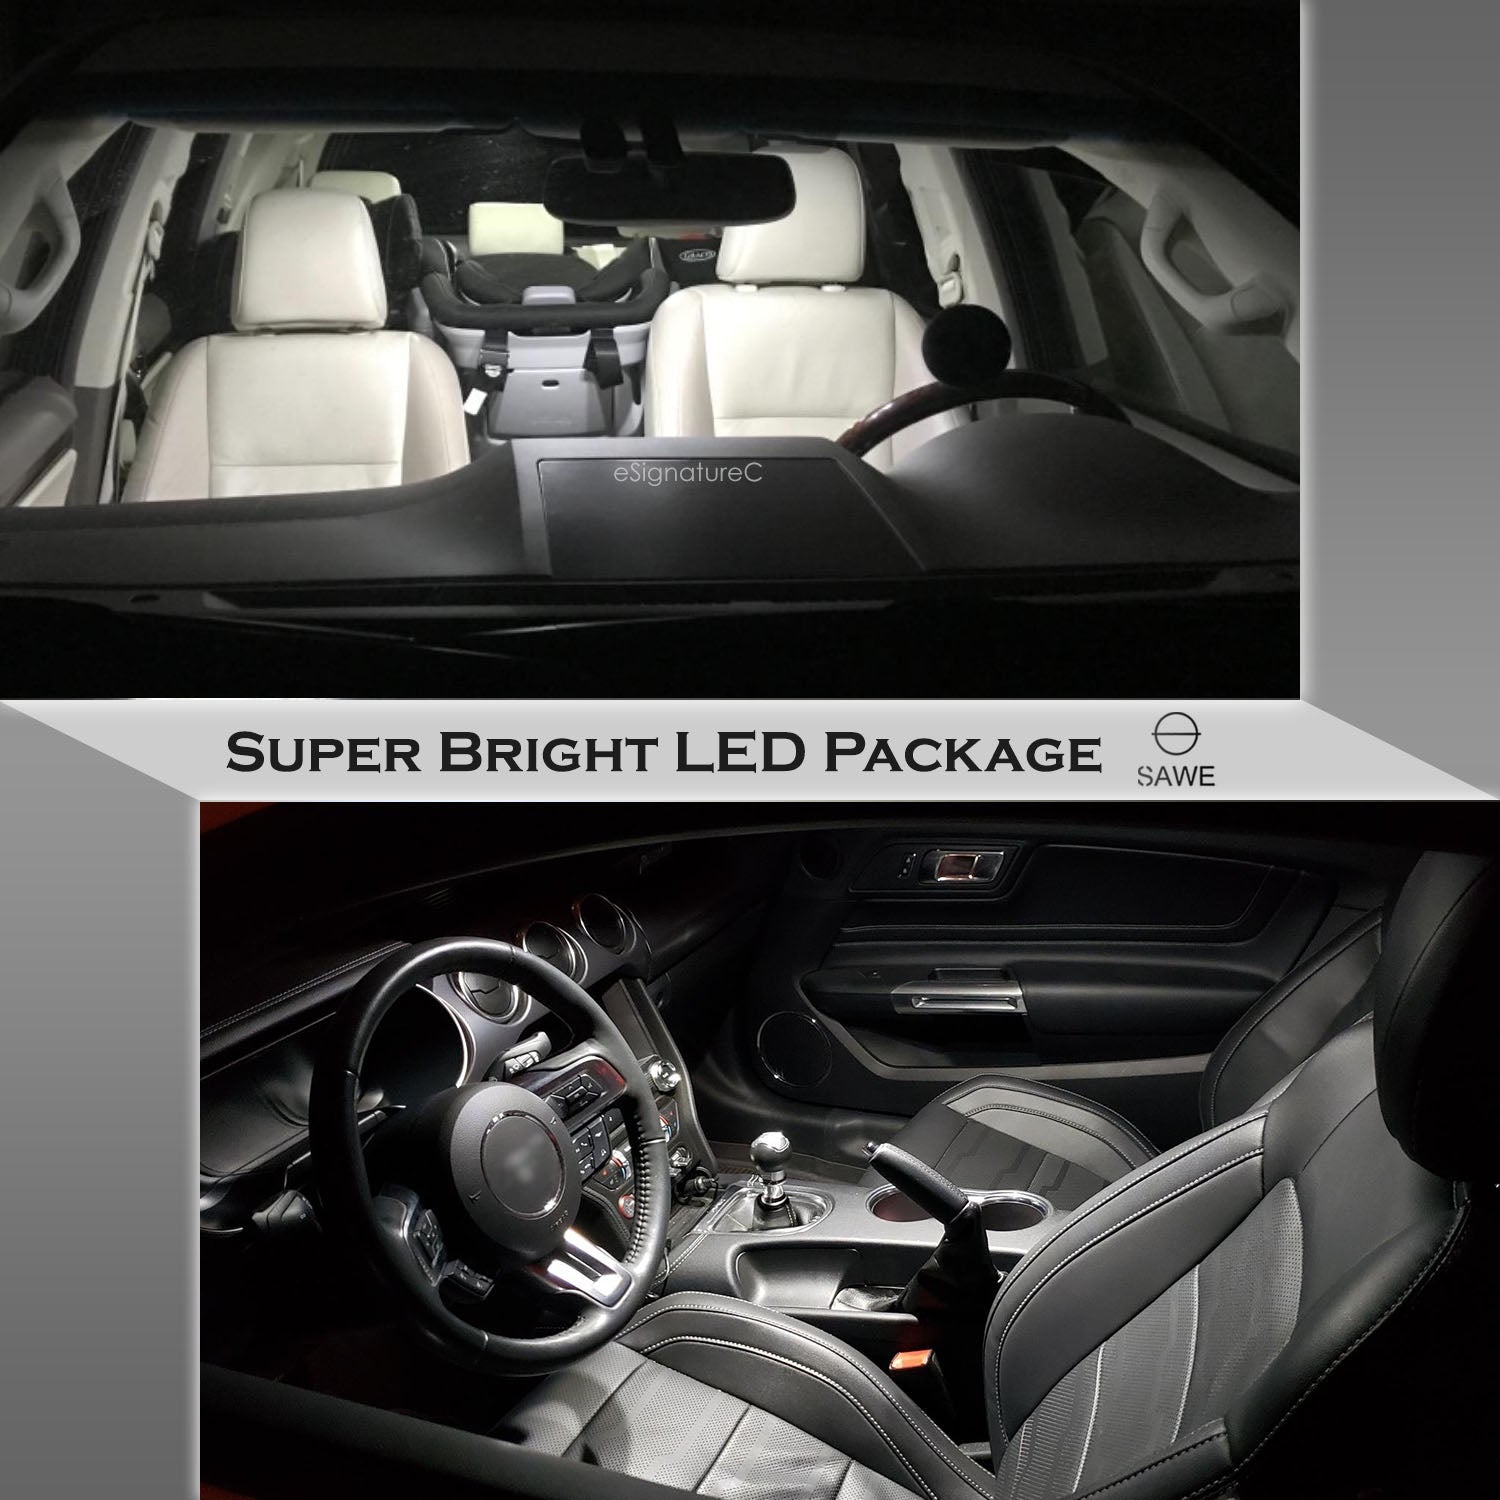 For Dodge Durango Interior LED Lights - Dome & Map Lights Package Kit for 2004 - 2009 - White